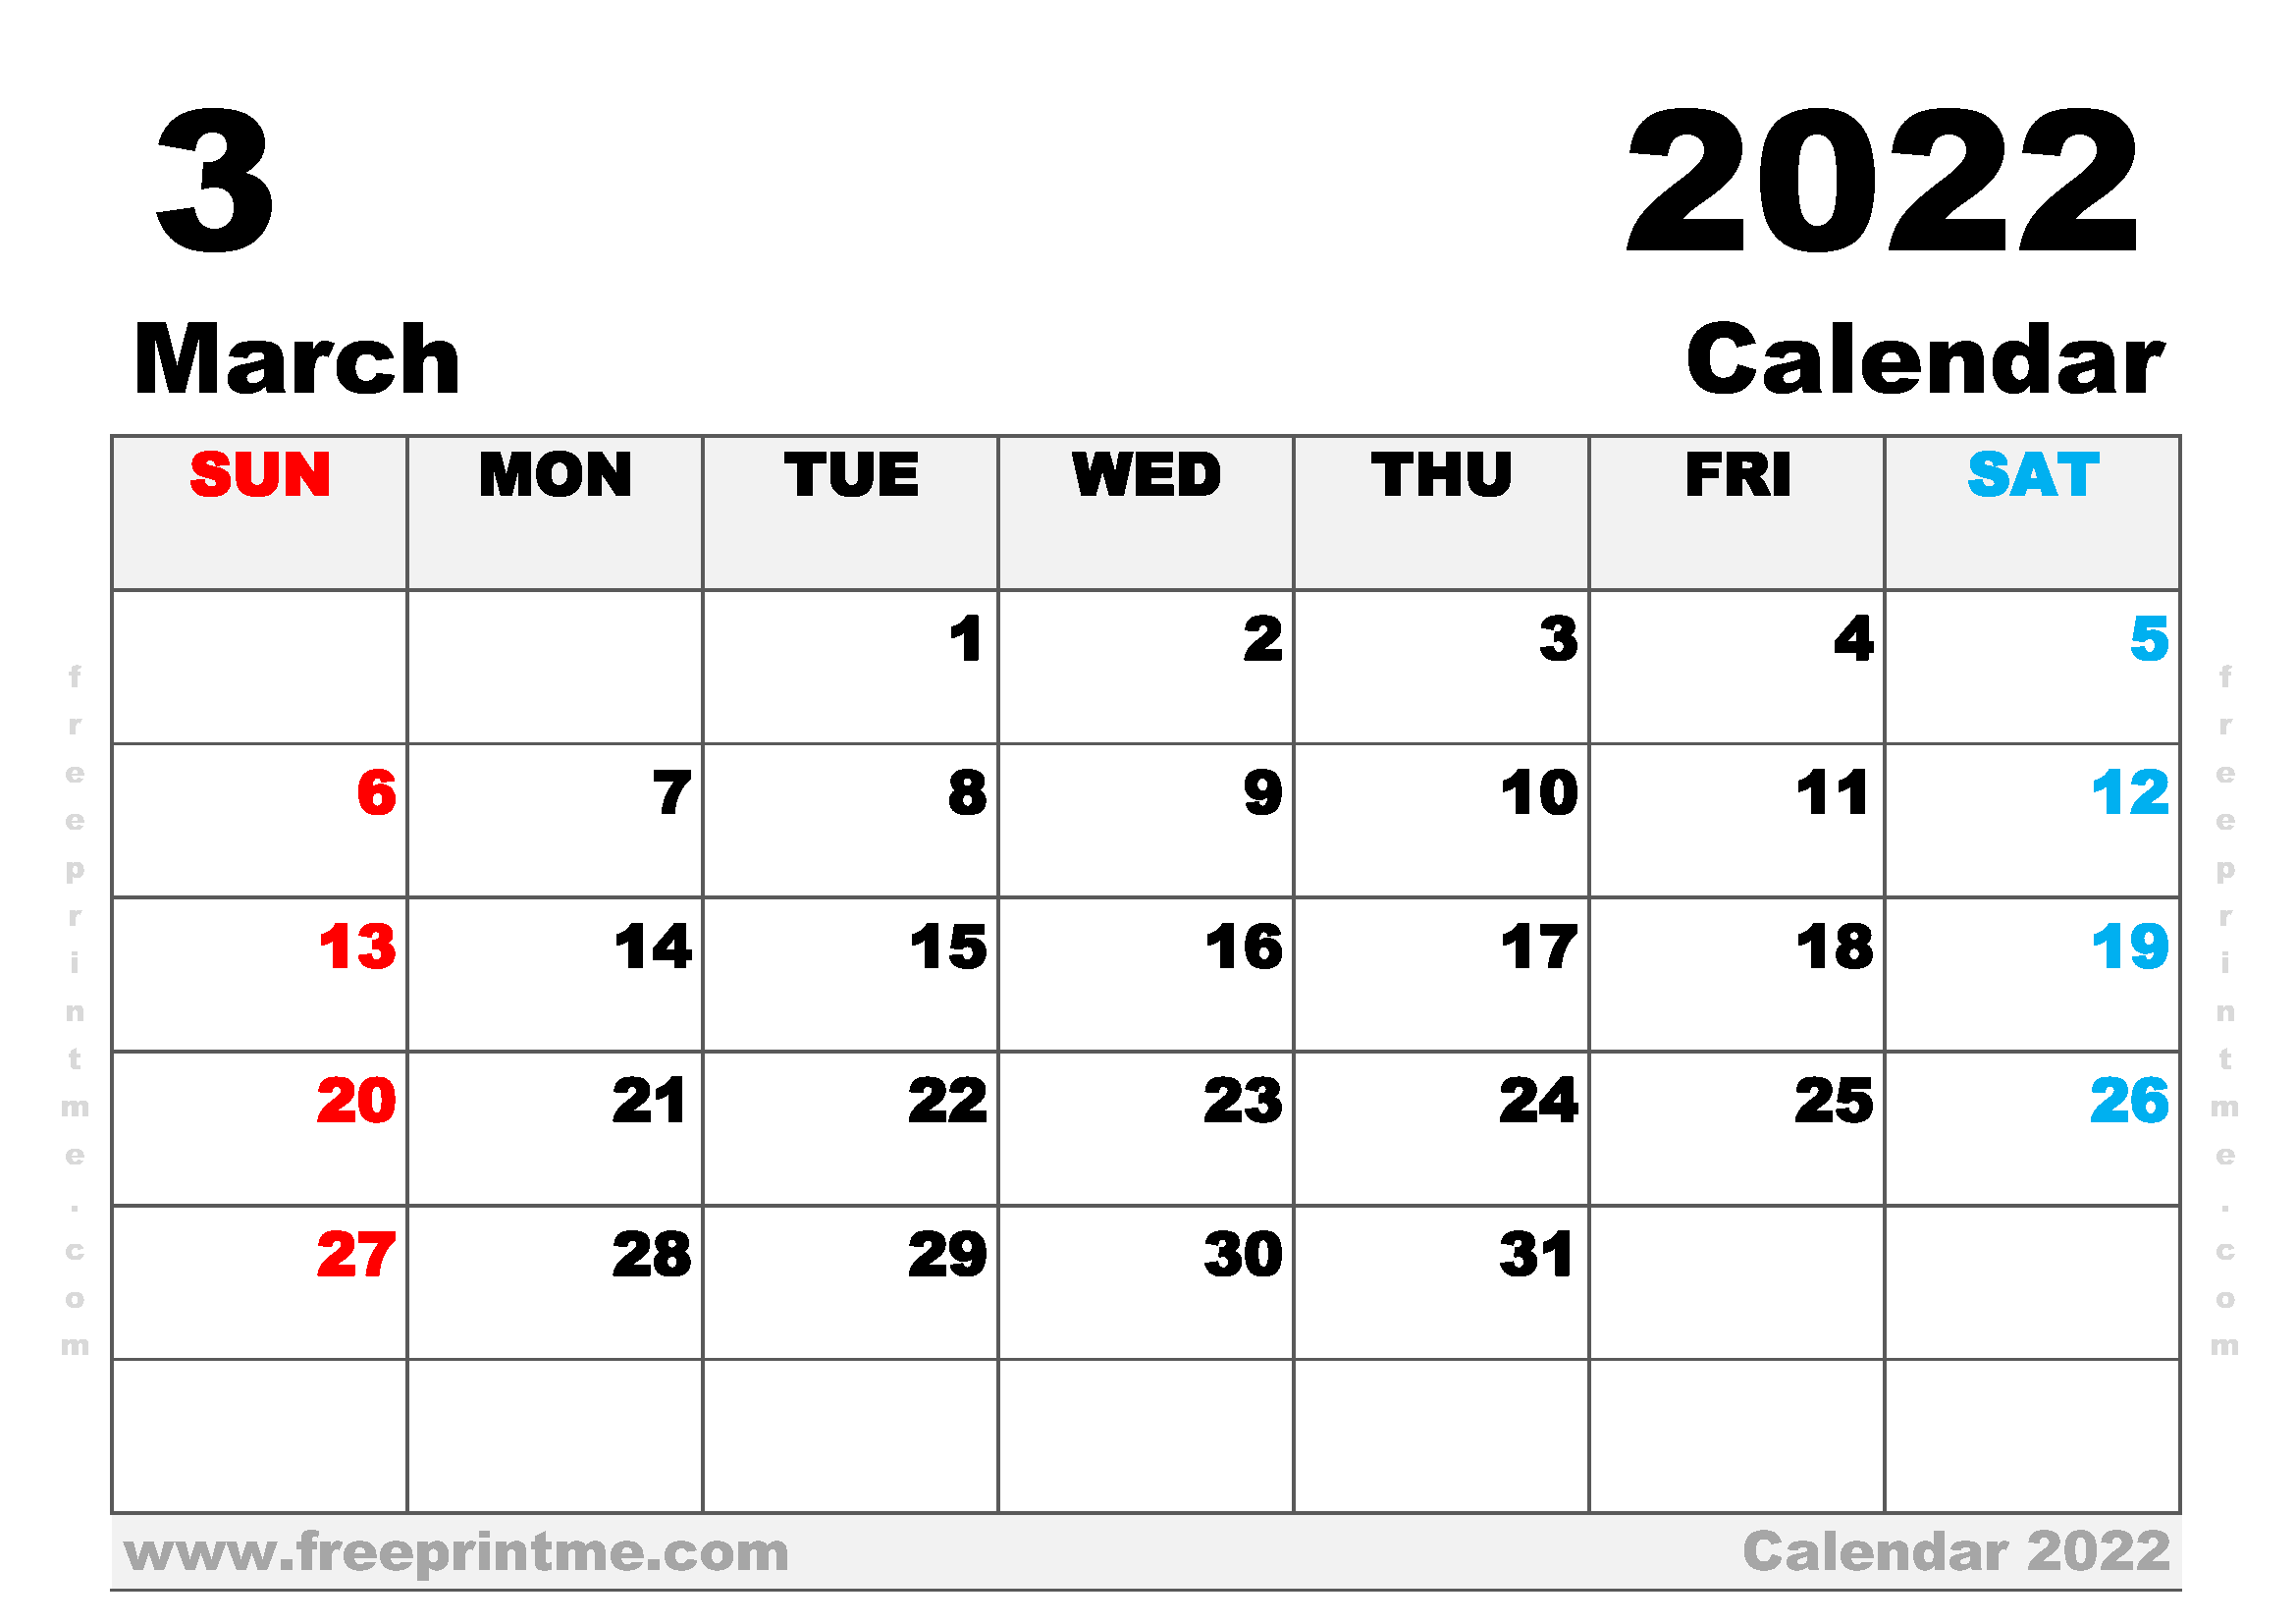 March 2022 Calendar Free Printable March 2022 Calendar A4 Wide